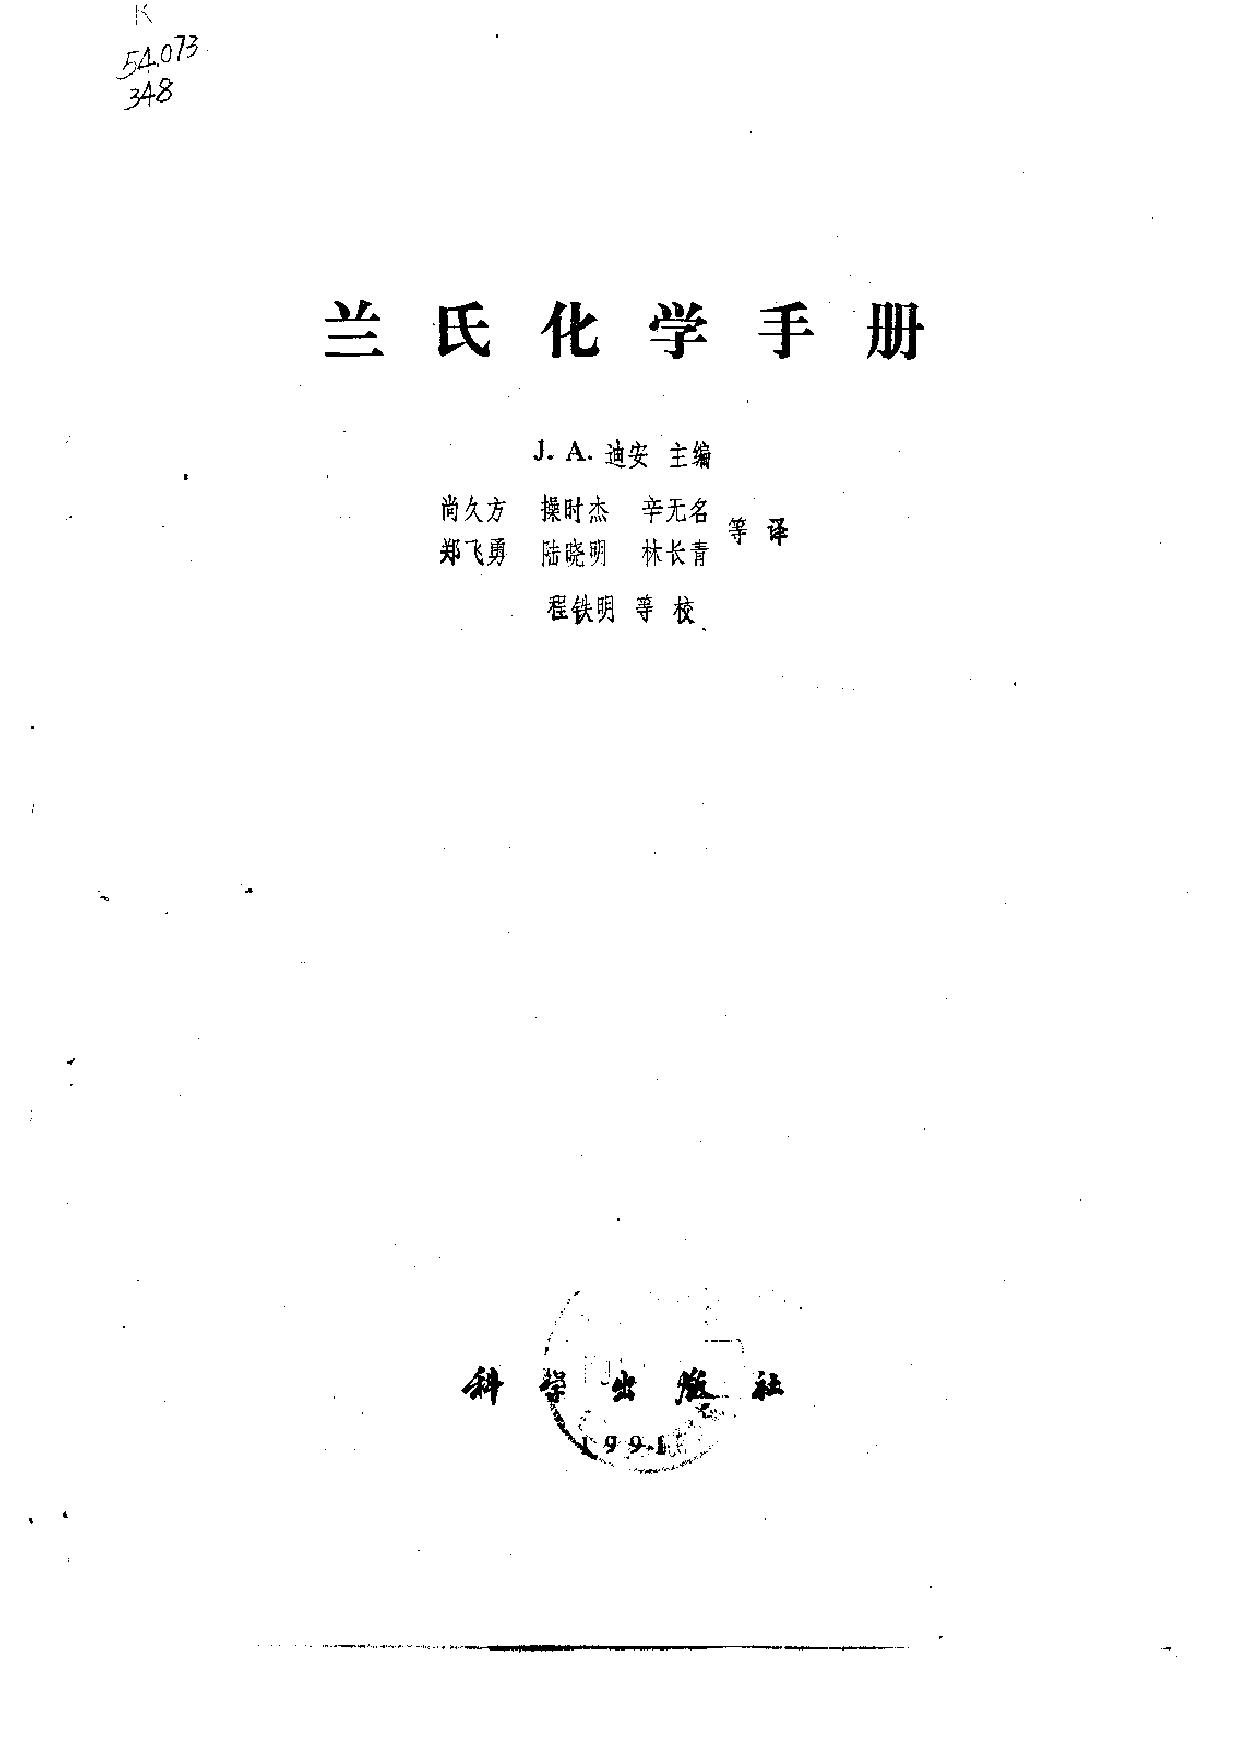 book cover